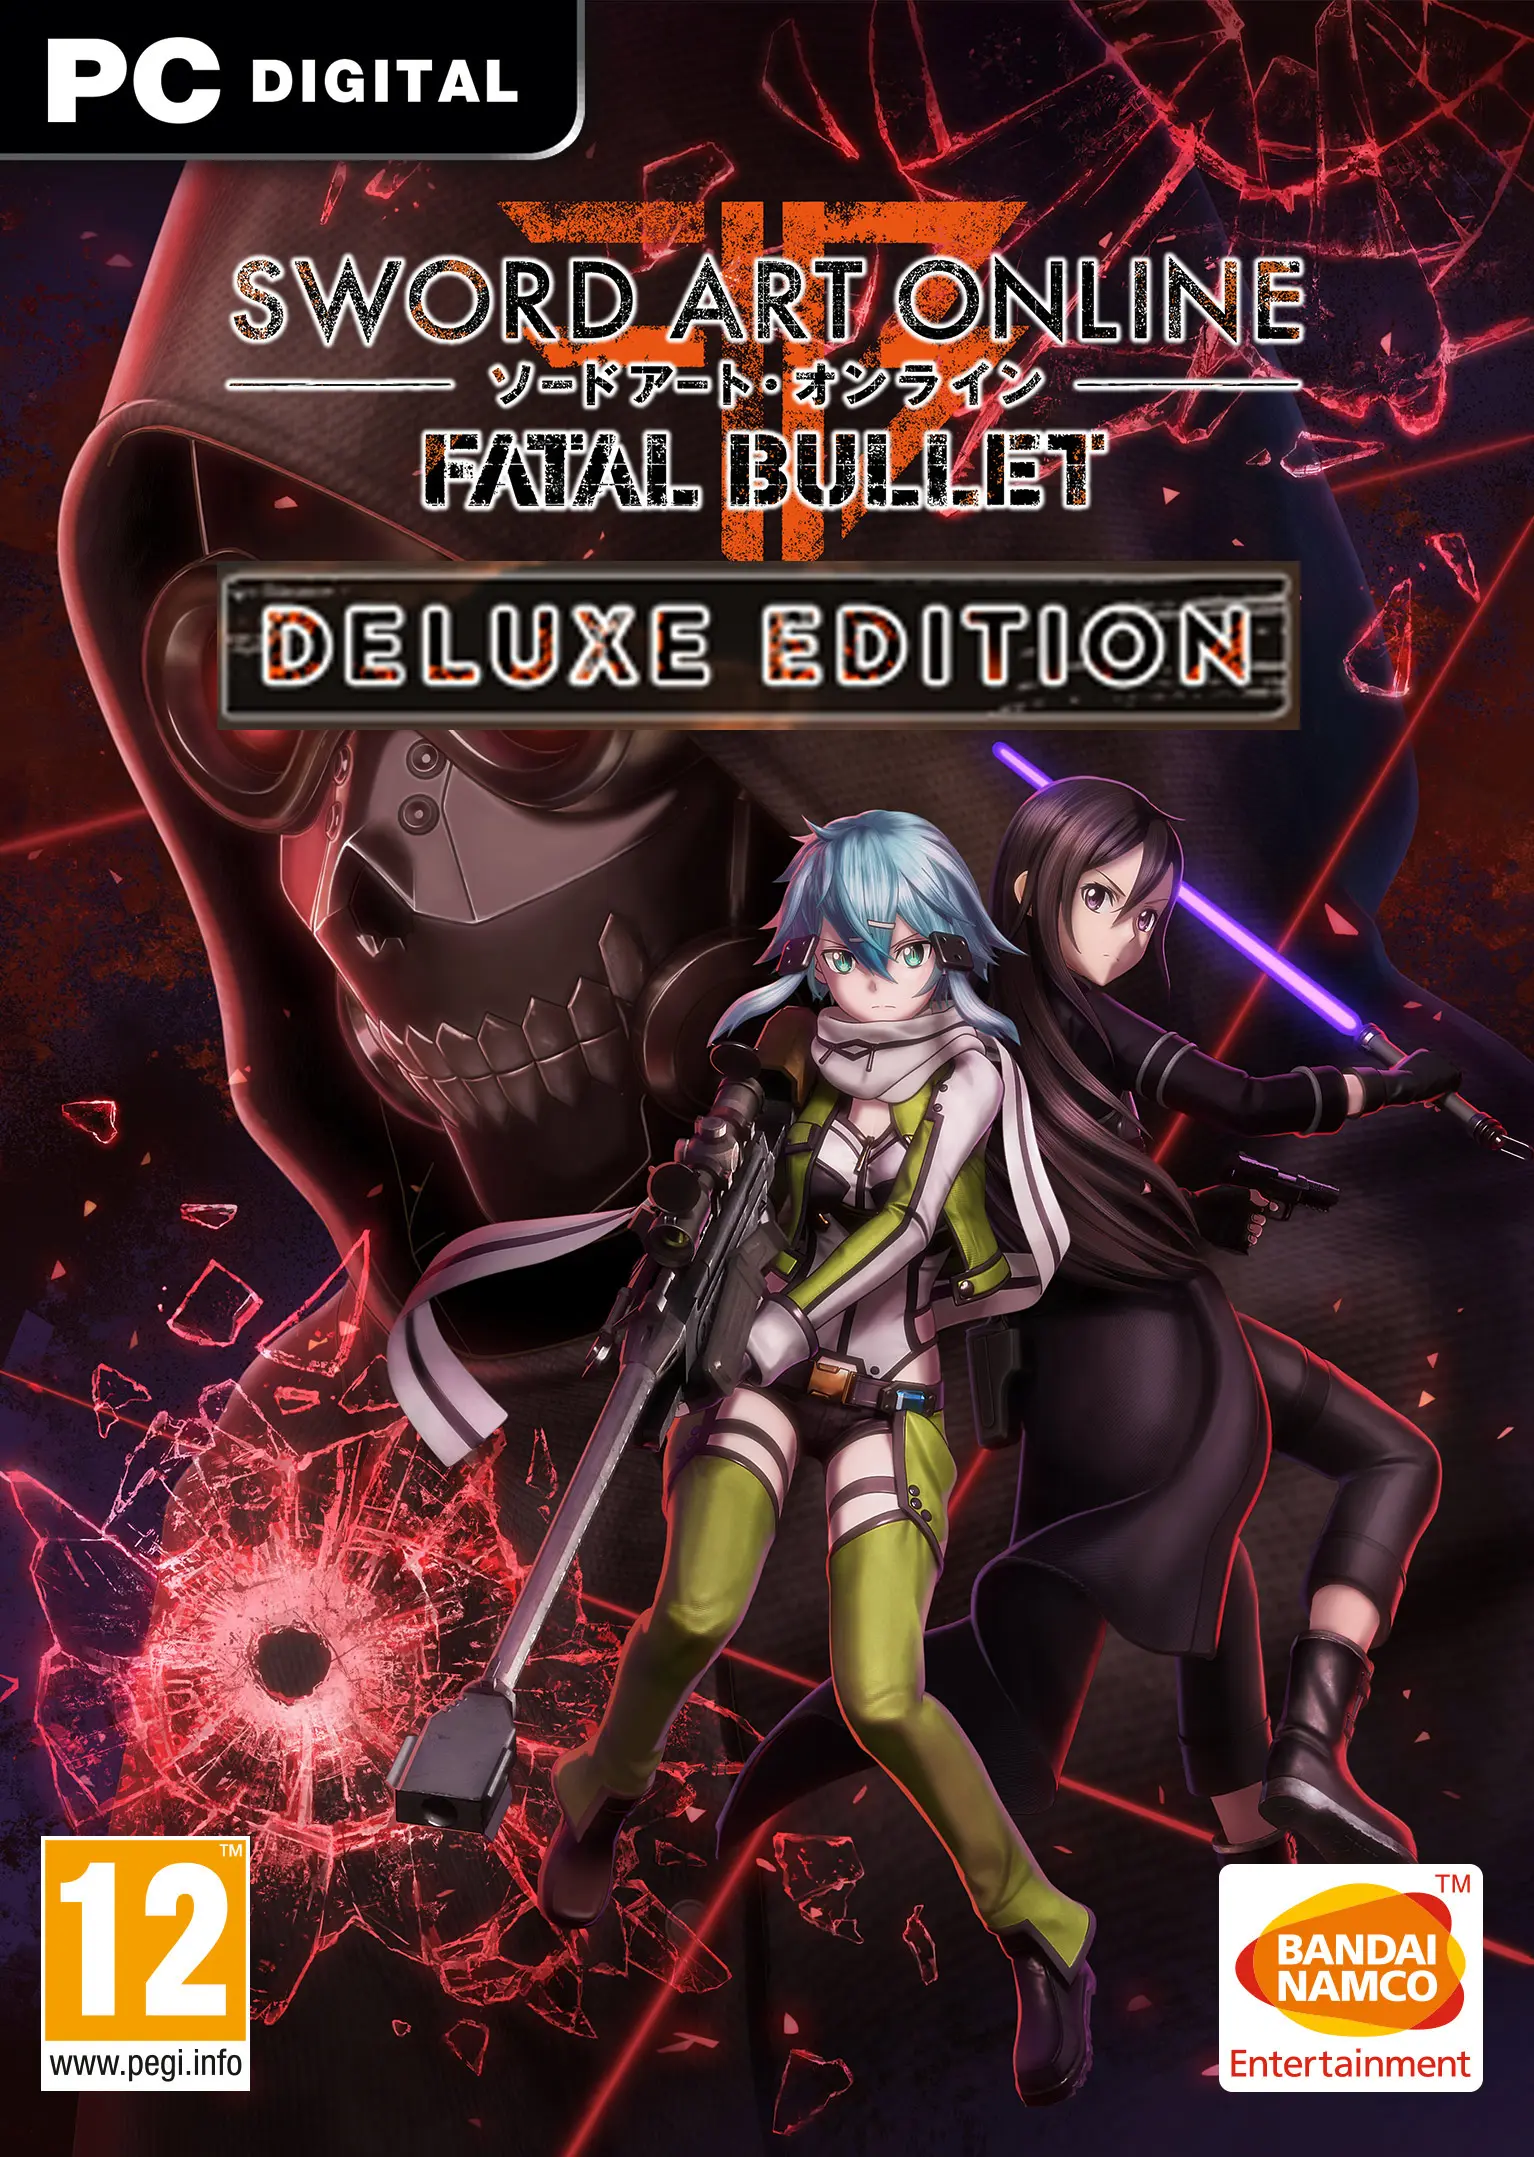 Sword Art Online Fatal Bullet Deluxe Edition (PC) - Steam - Digital Code